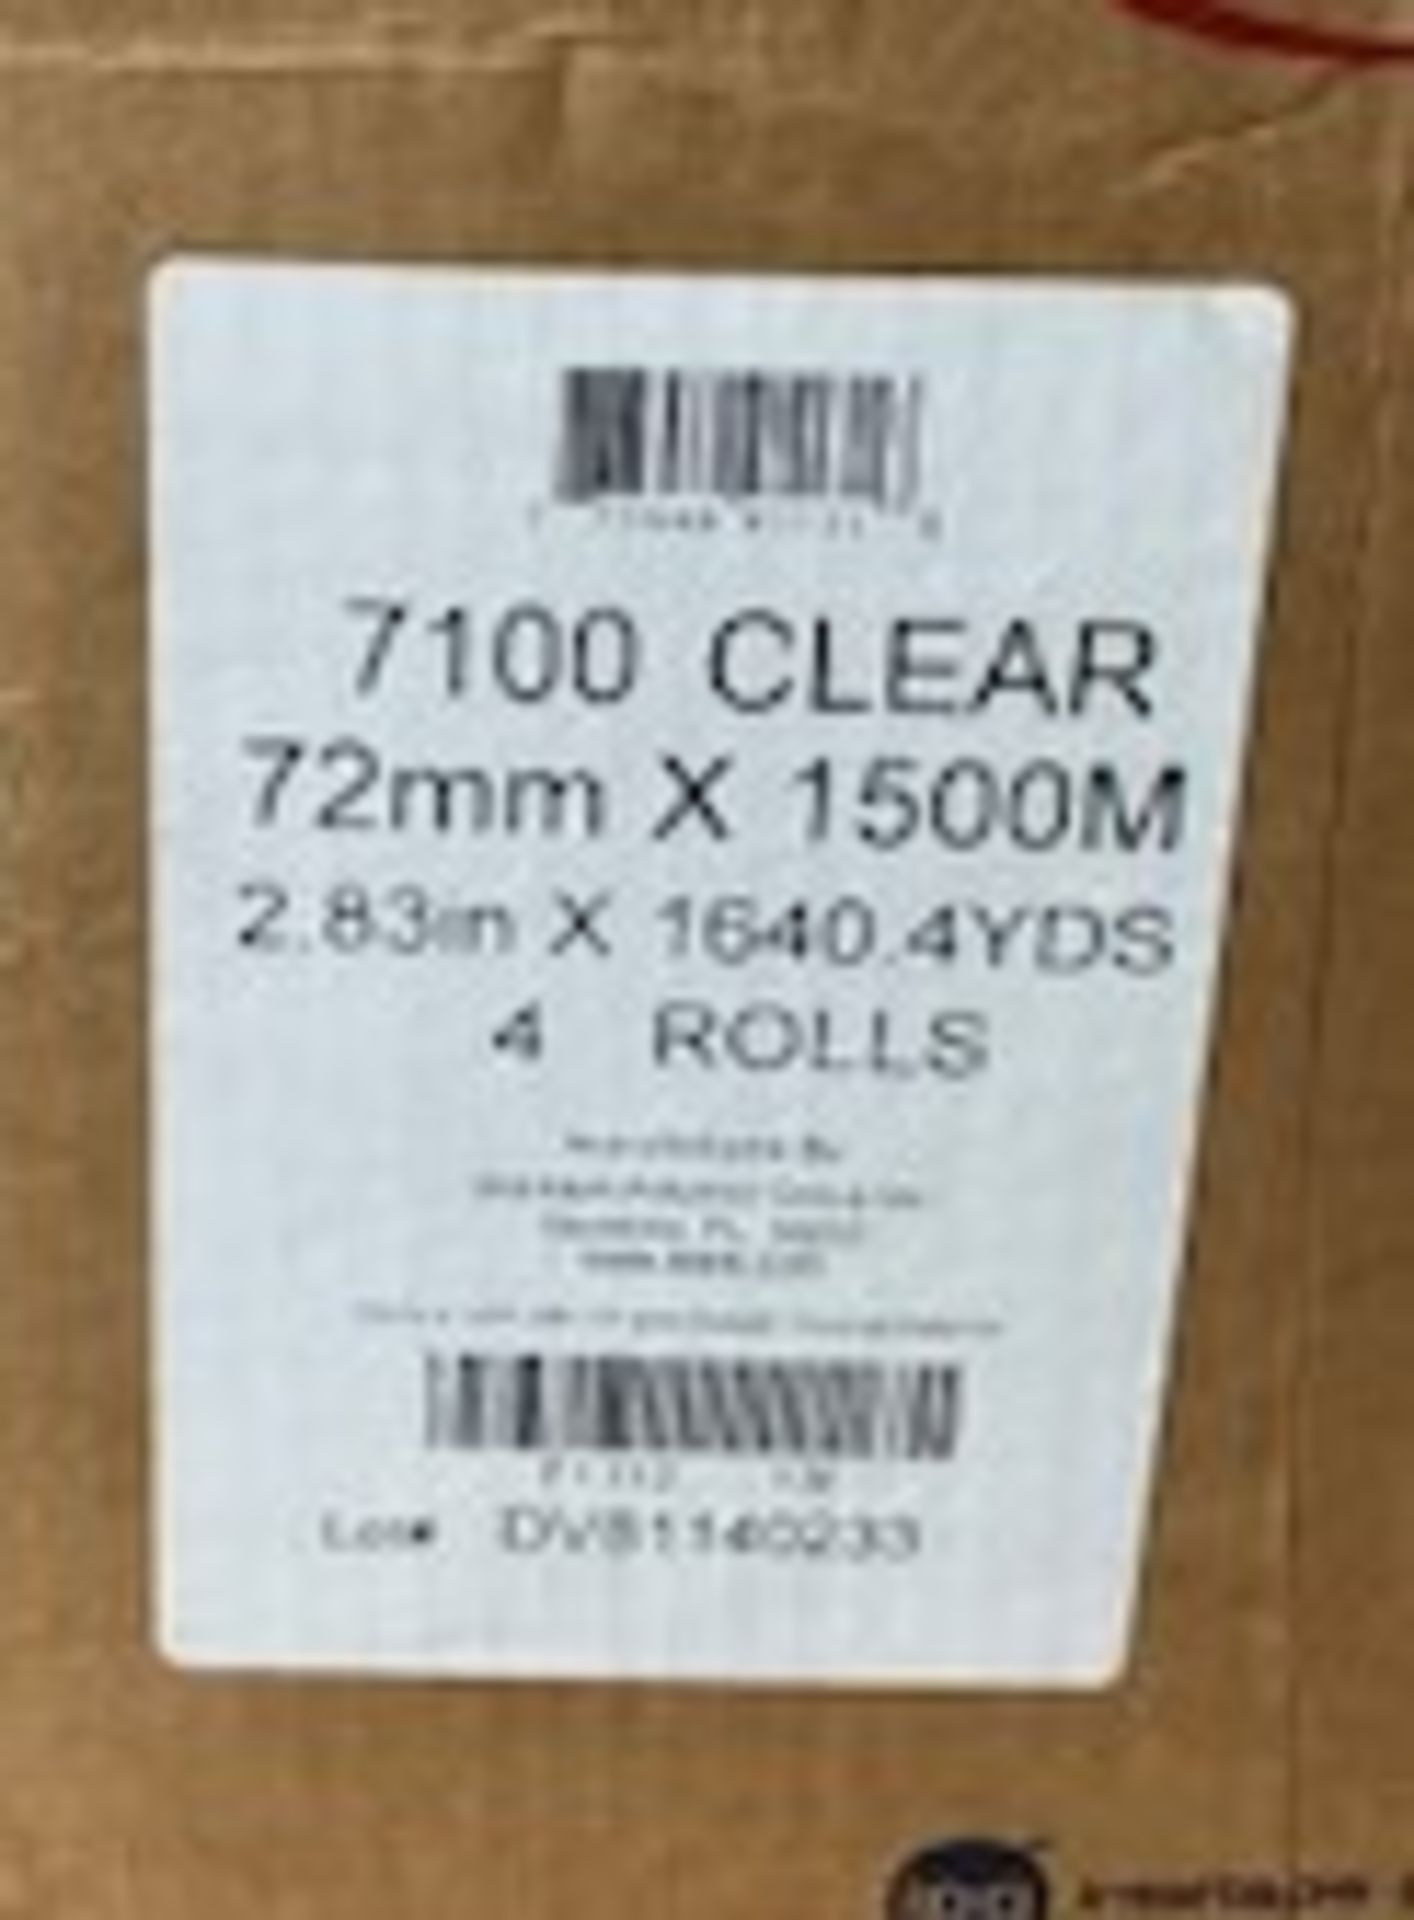 (48) Rolls - Intertape #7100 Clear 72mm x 1500M (2.83" x 1640YD) Box Sealing Tape - Image 2 of 2